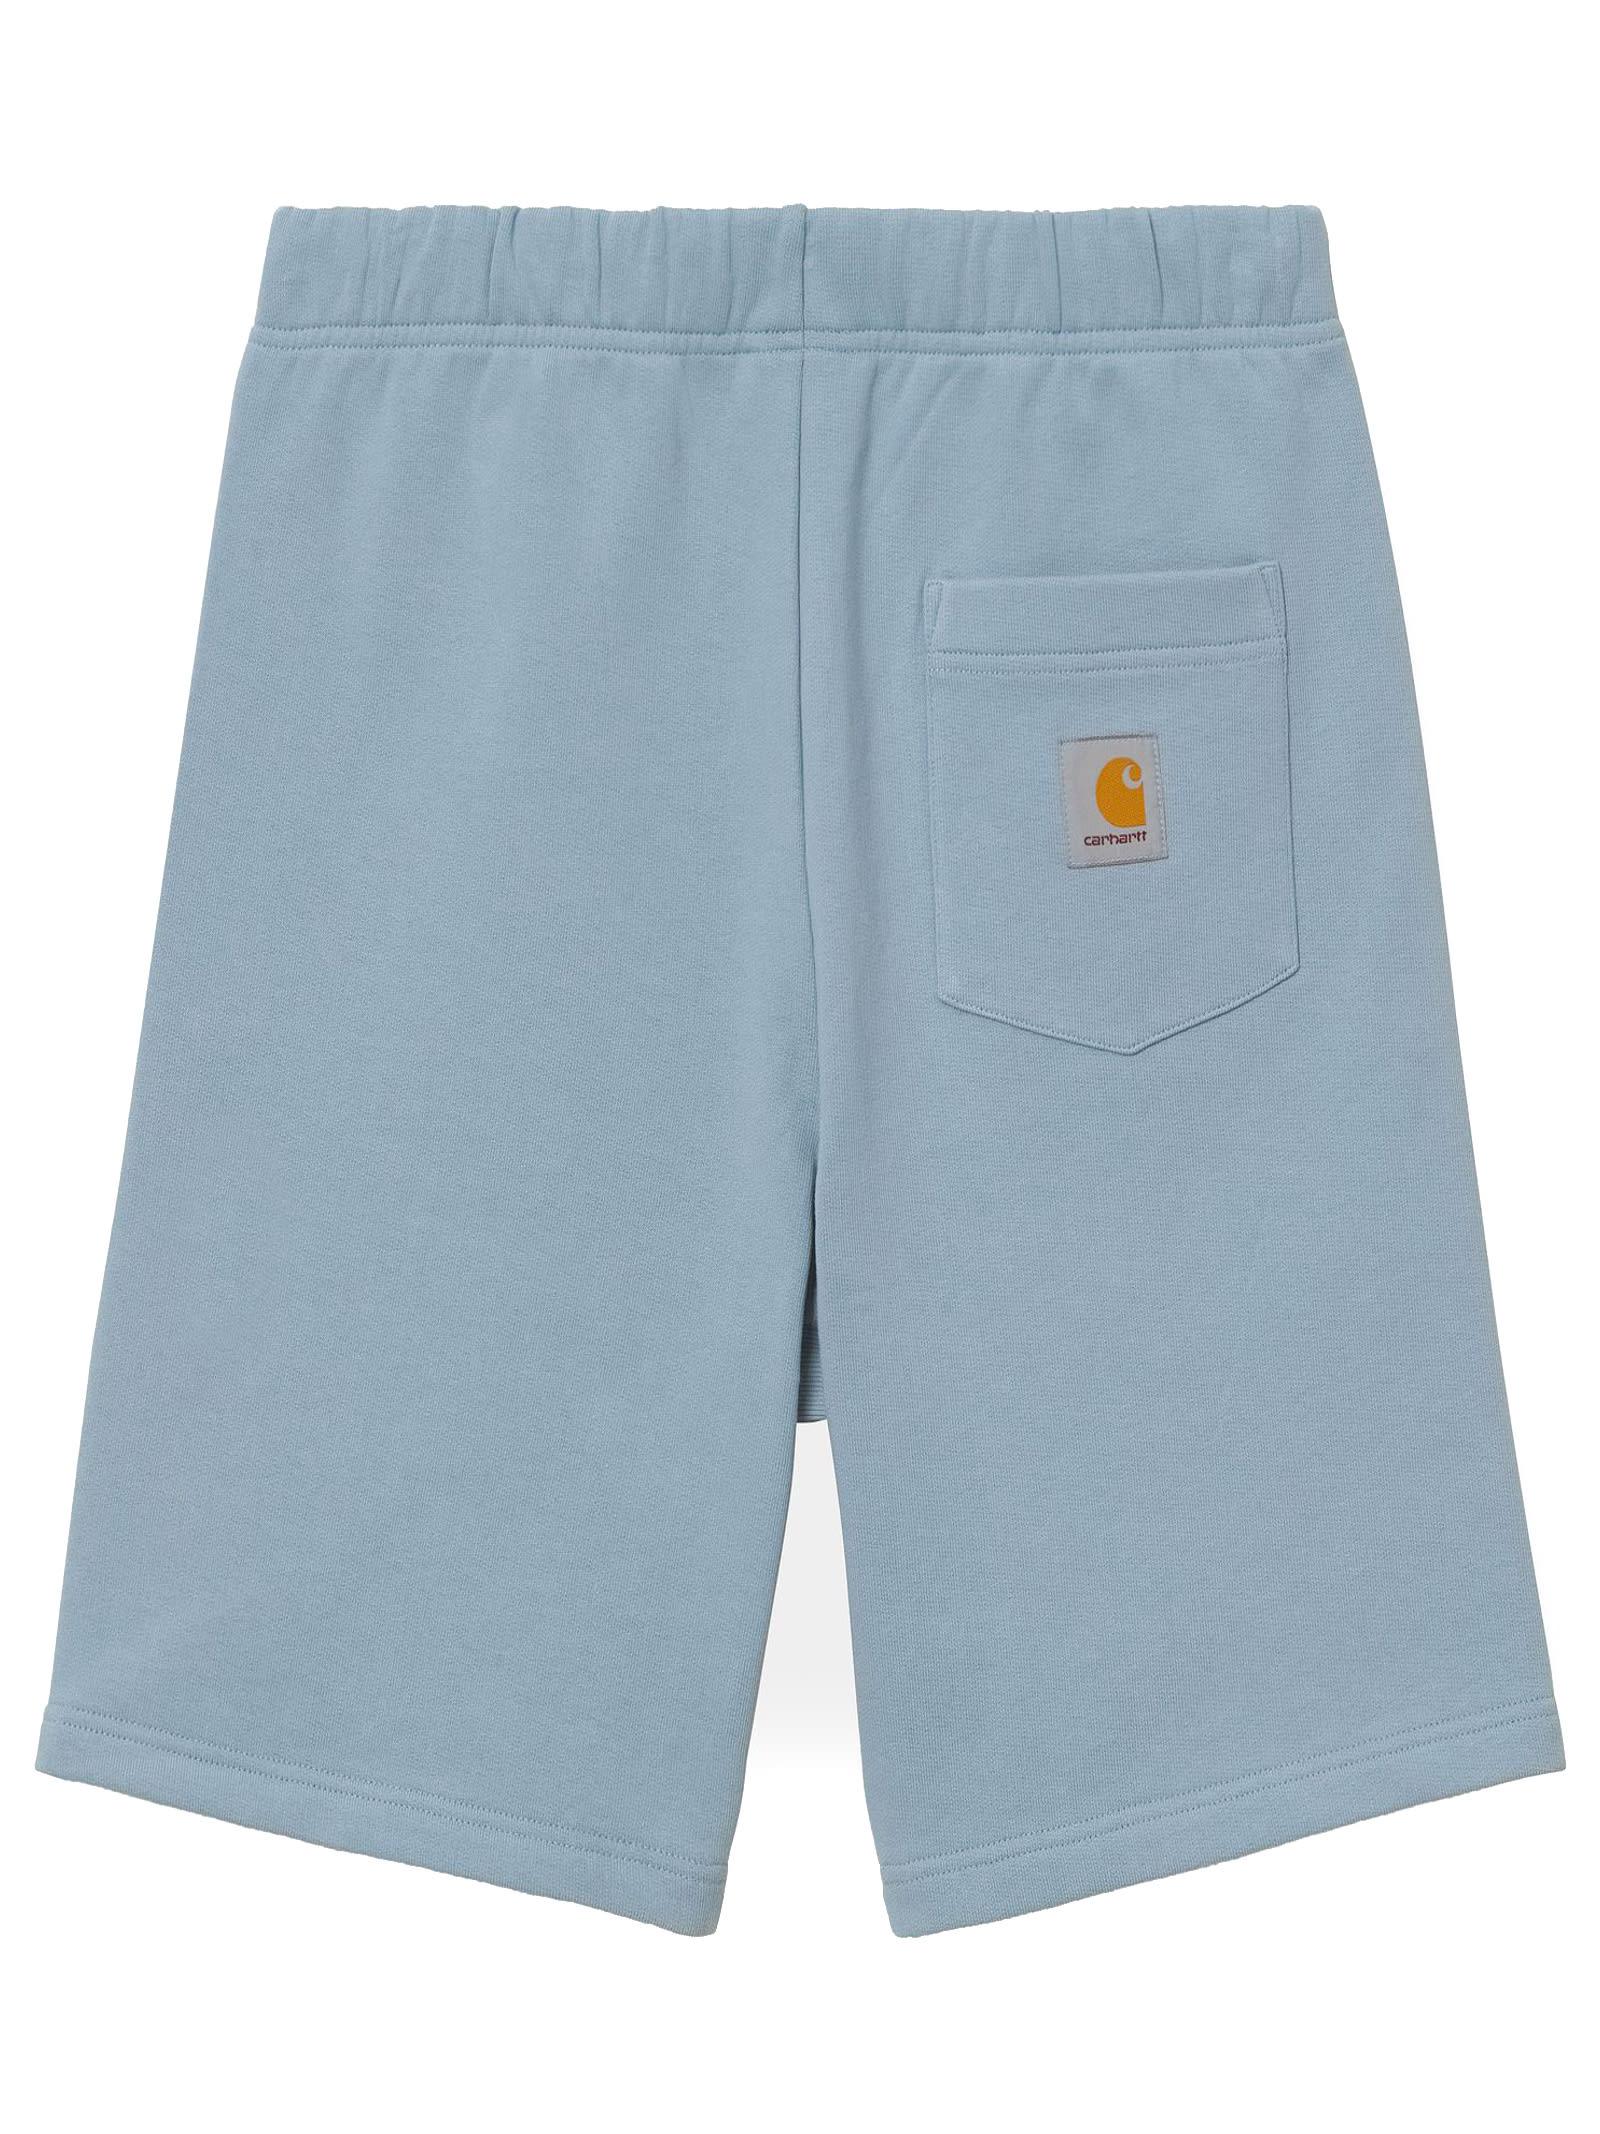 Carhartt Light Blue Cotton Shorts for Men - Save 3% | Lyst